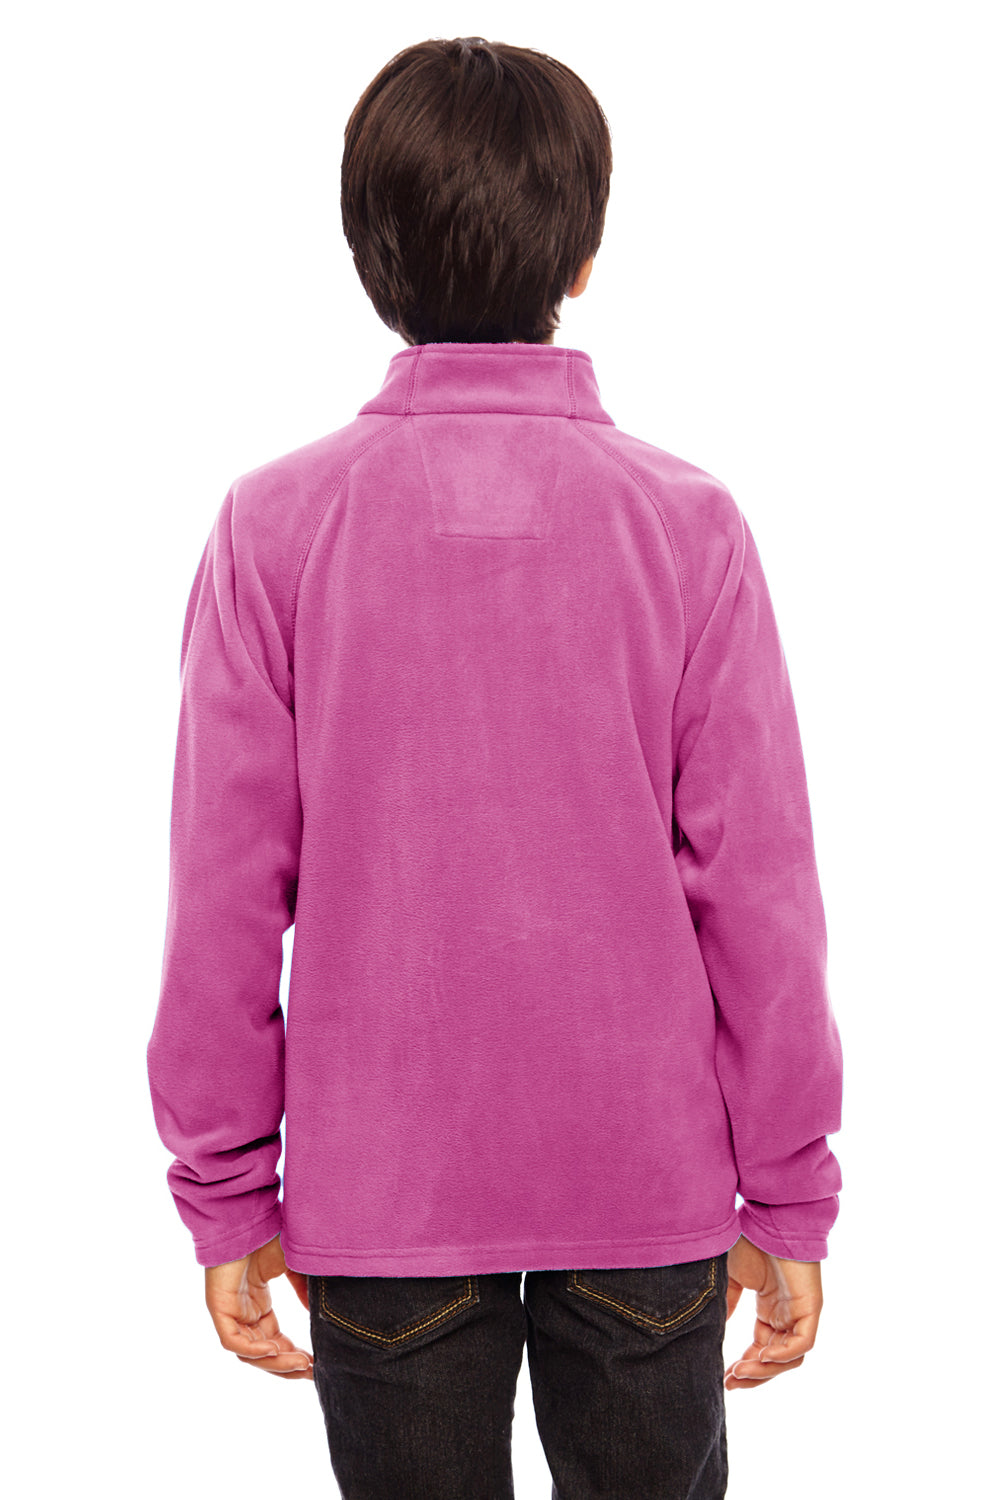 Team 365 TT90Y Youth Campus Full Zip Microfleece Jacket Charity Pink Back